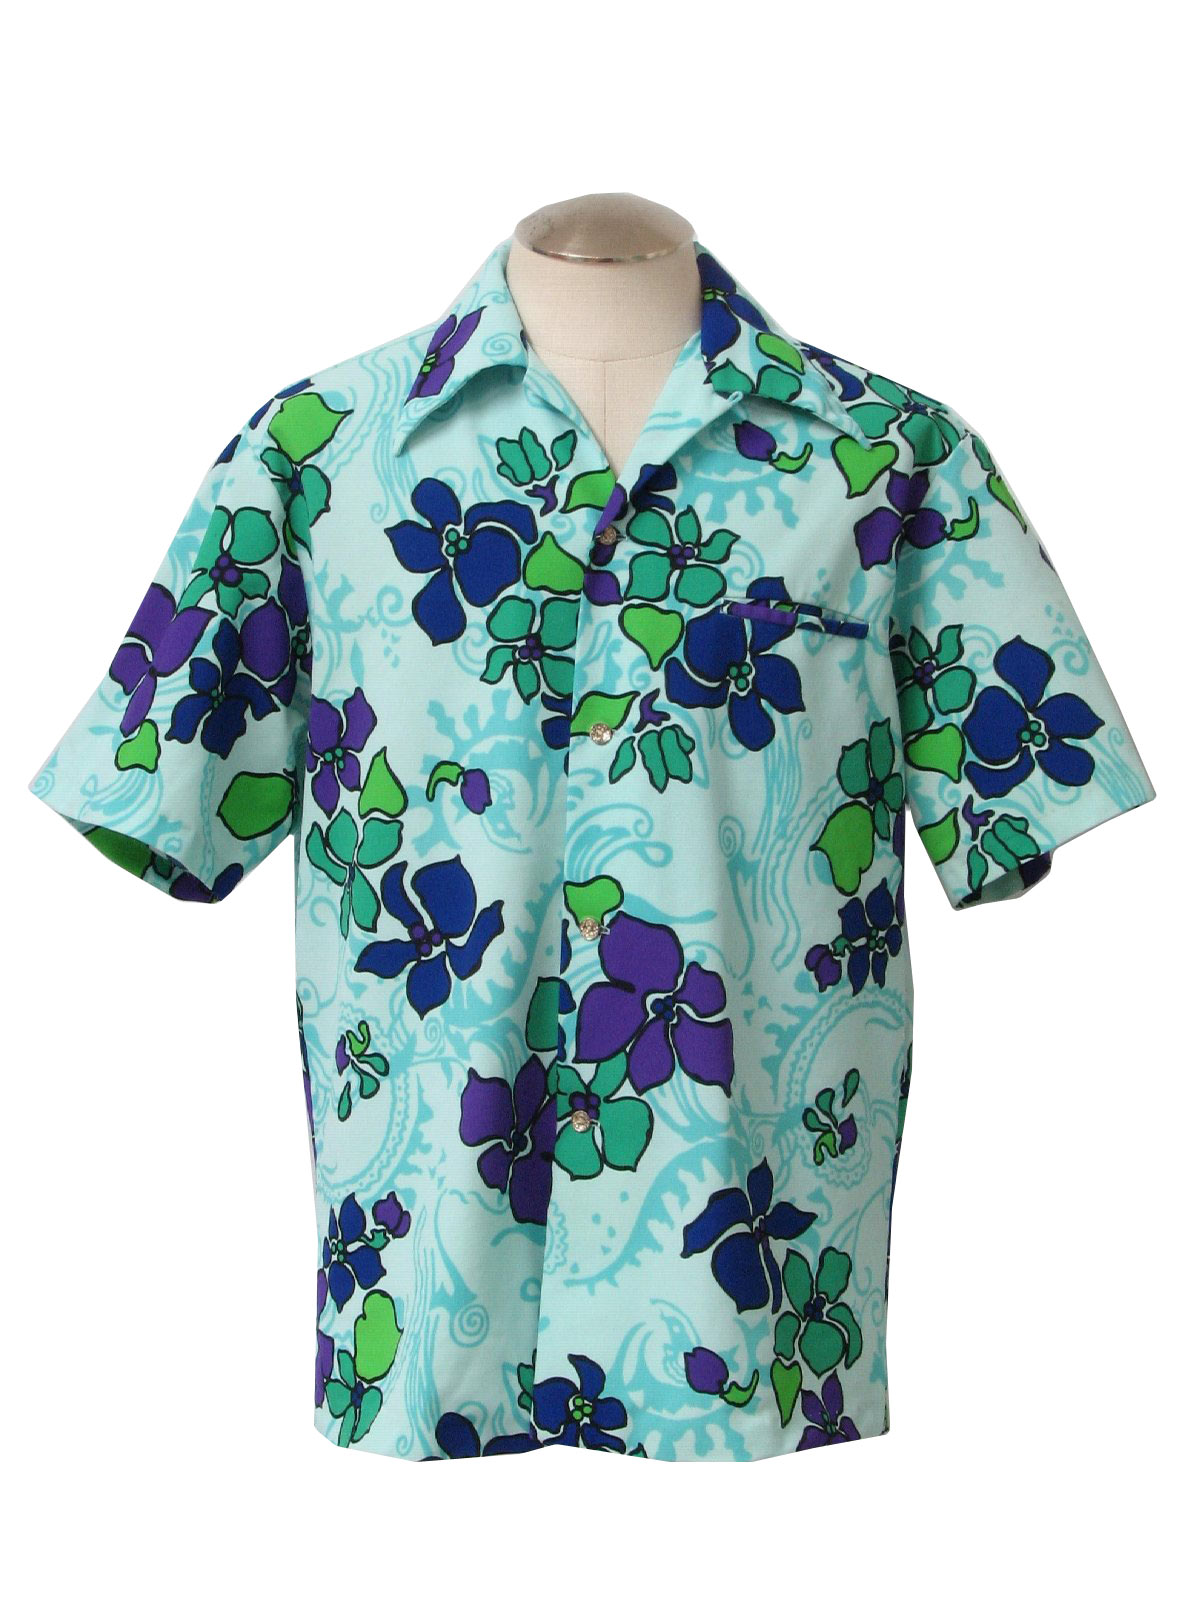 Napili Seventies Vintage Knit Shirt: 70s -Napili- Mens aqua, turquoise ...